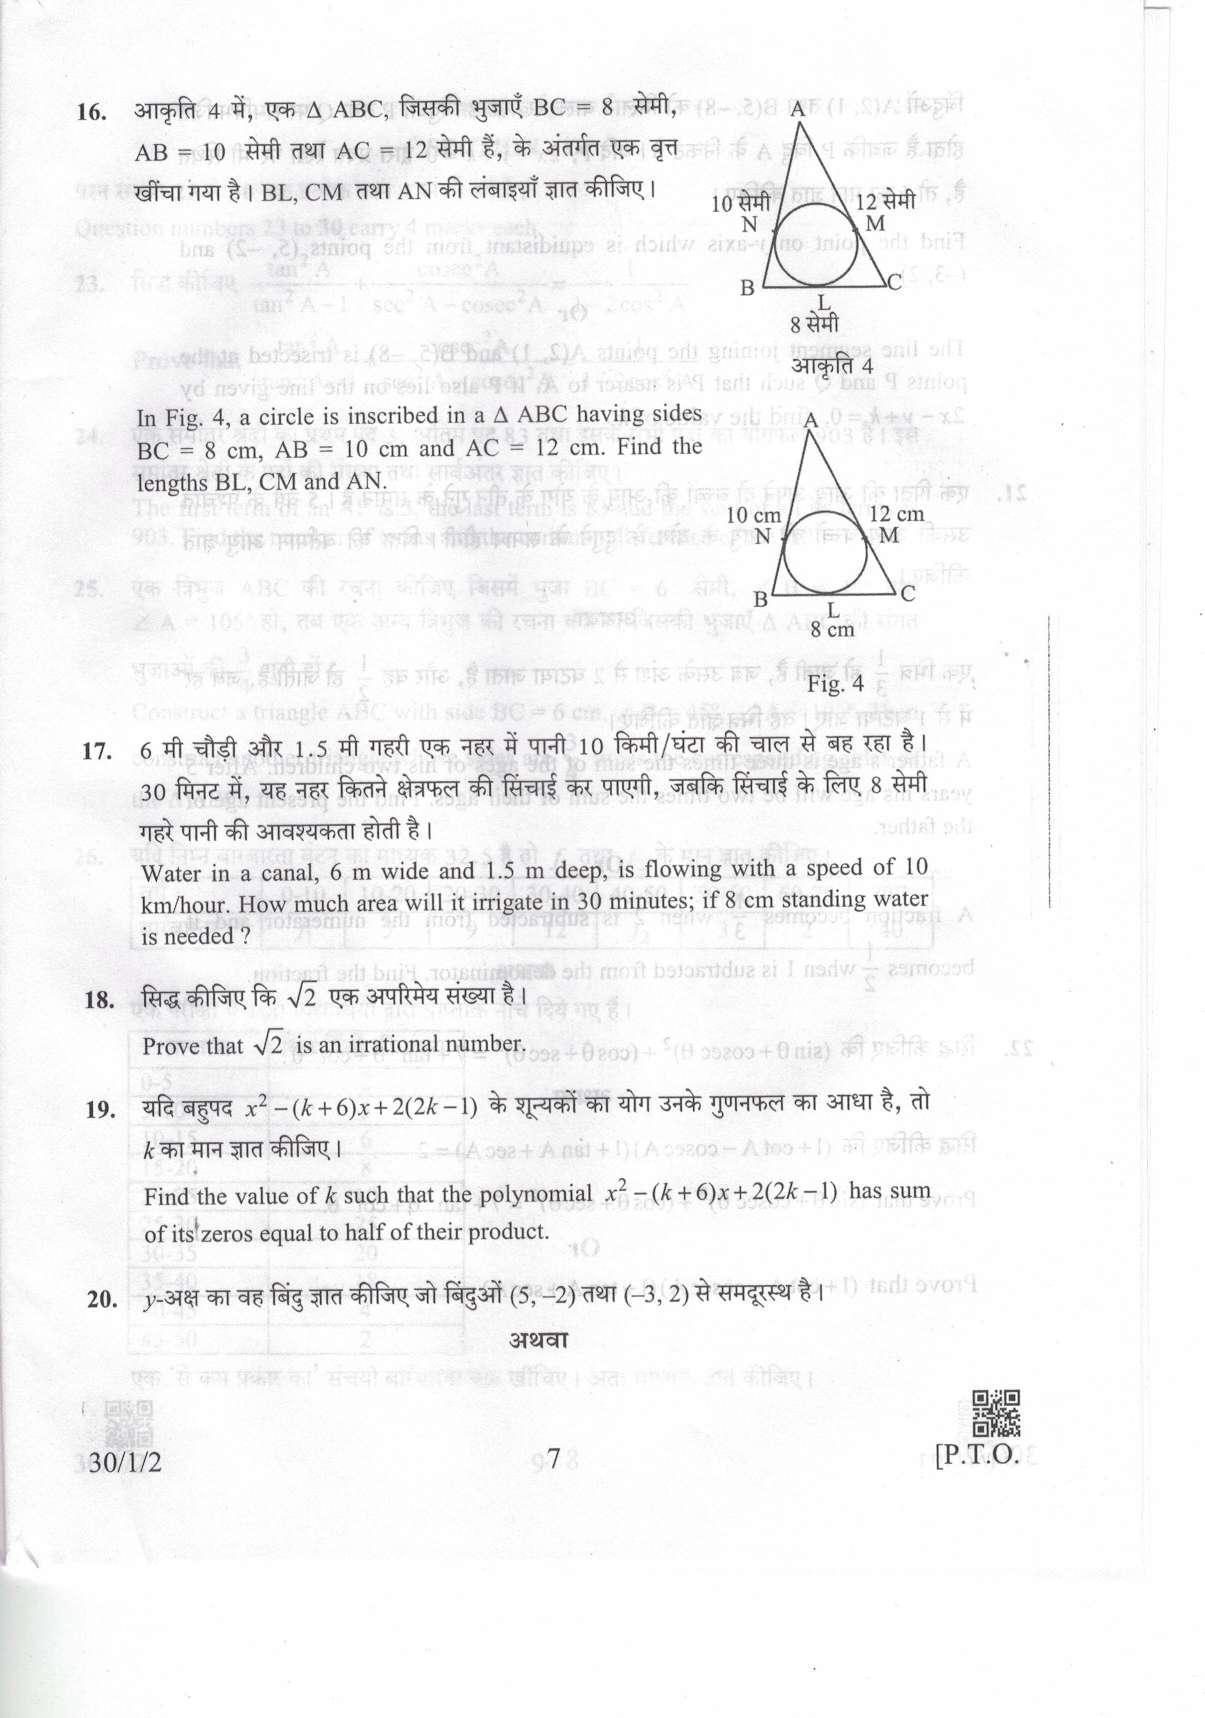 CBSE Class 10 Maths (30/1/2 - SET 2) 2019 Question Paper - Page 7